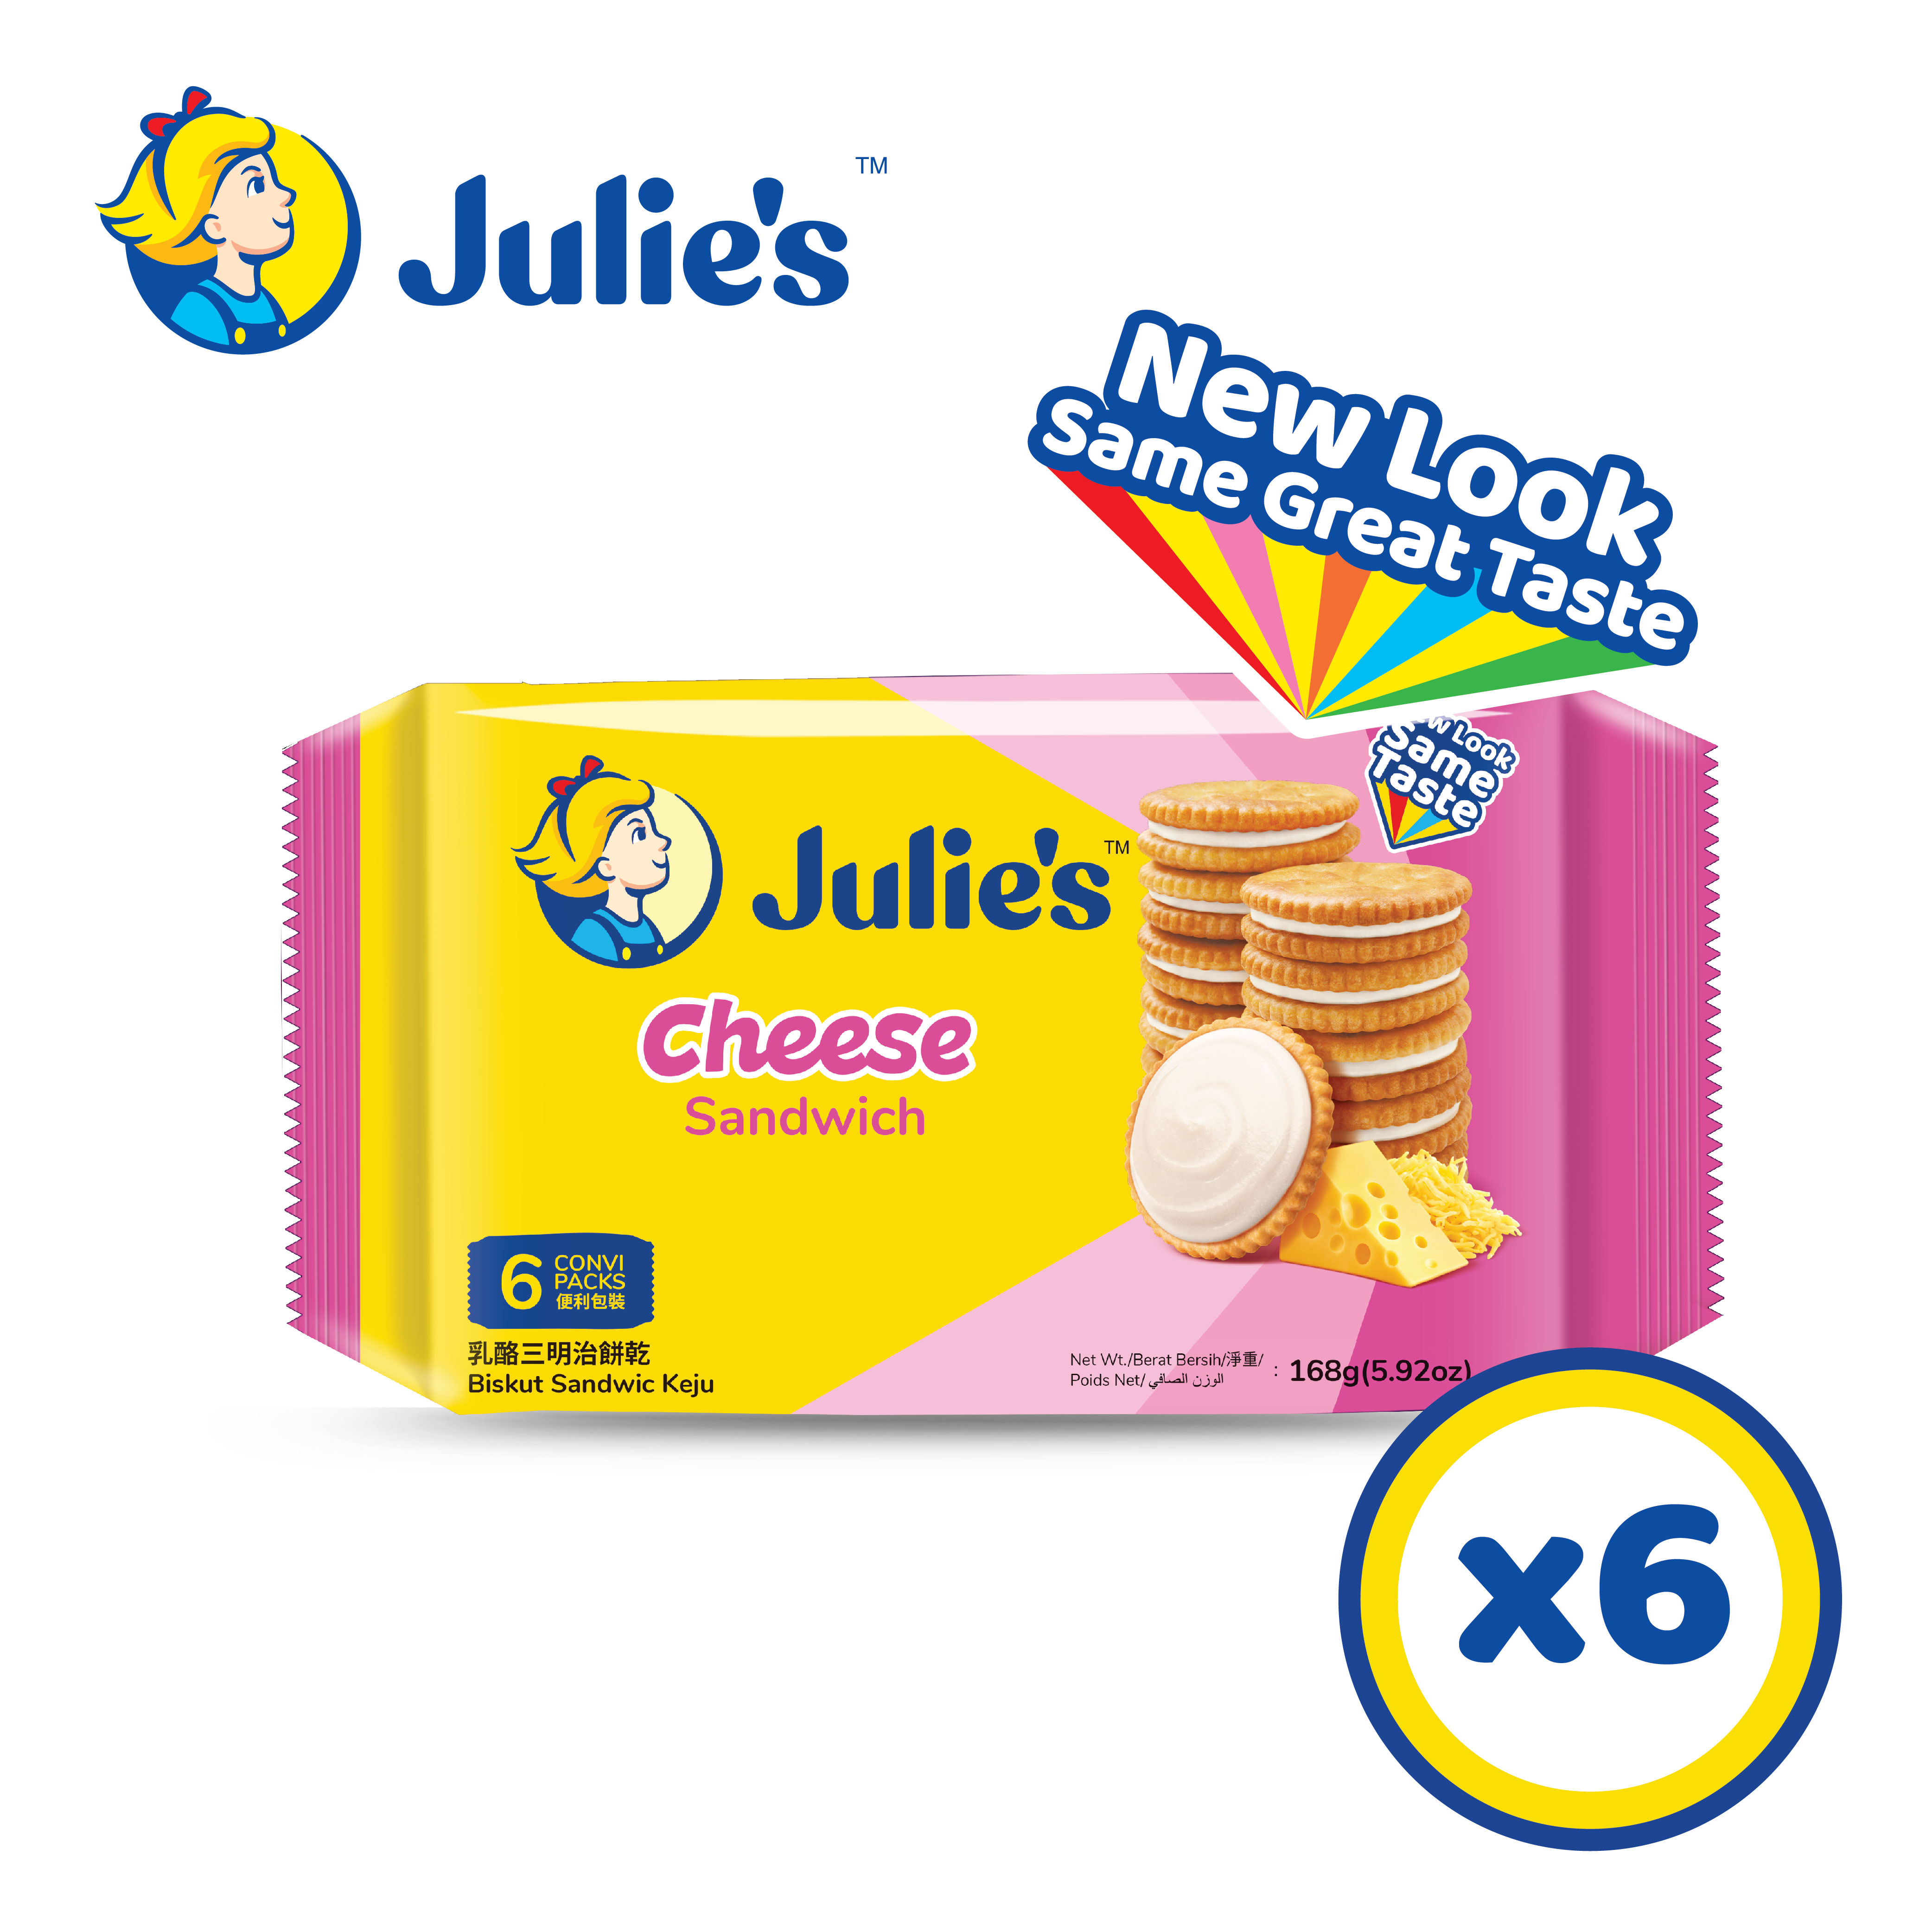 Julie’s Cheese Sandwich 168g x 6 pack